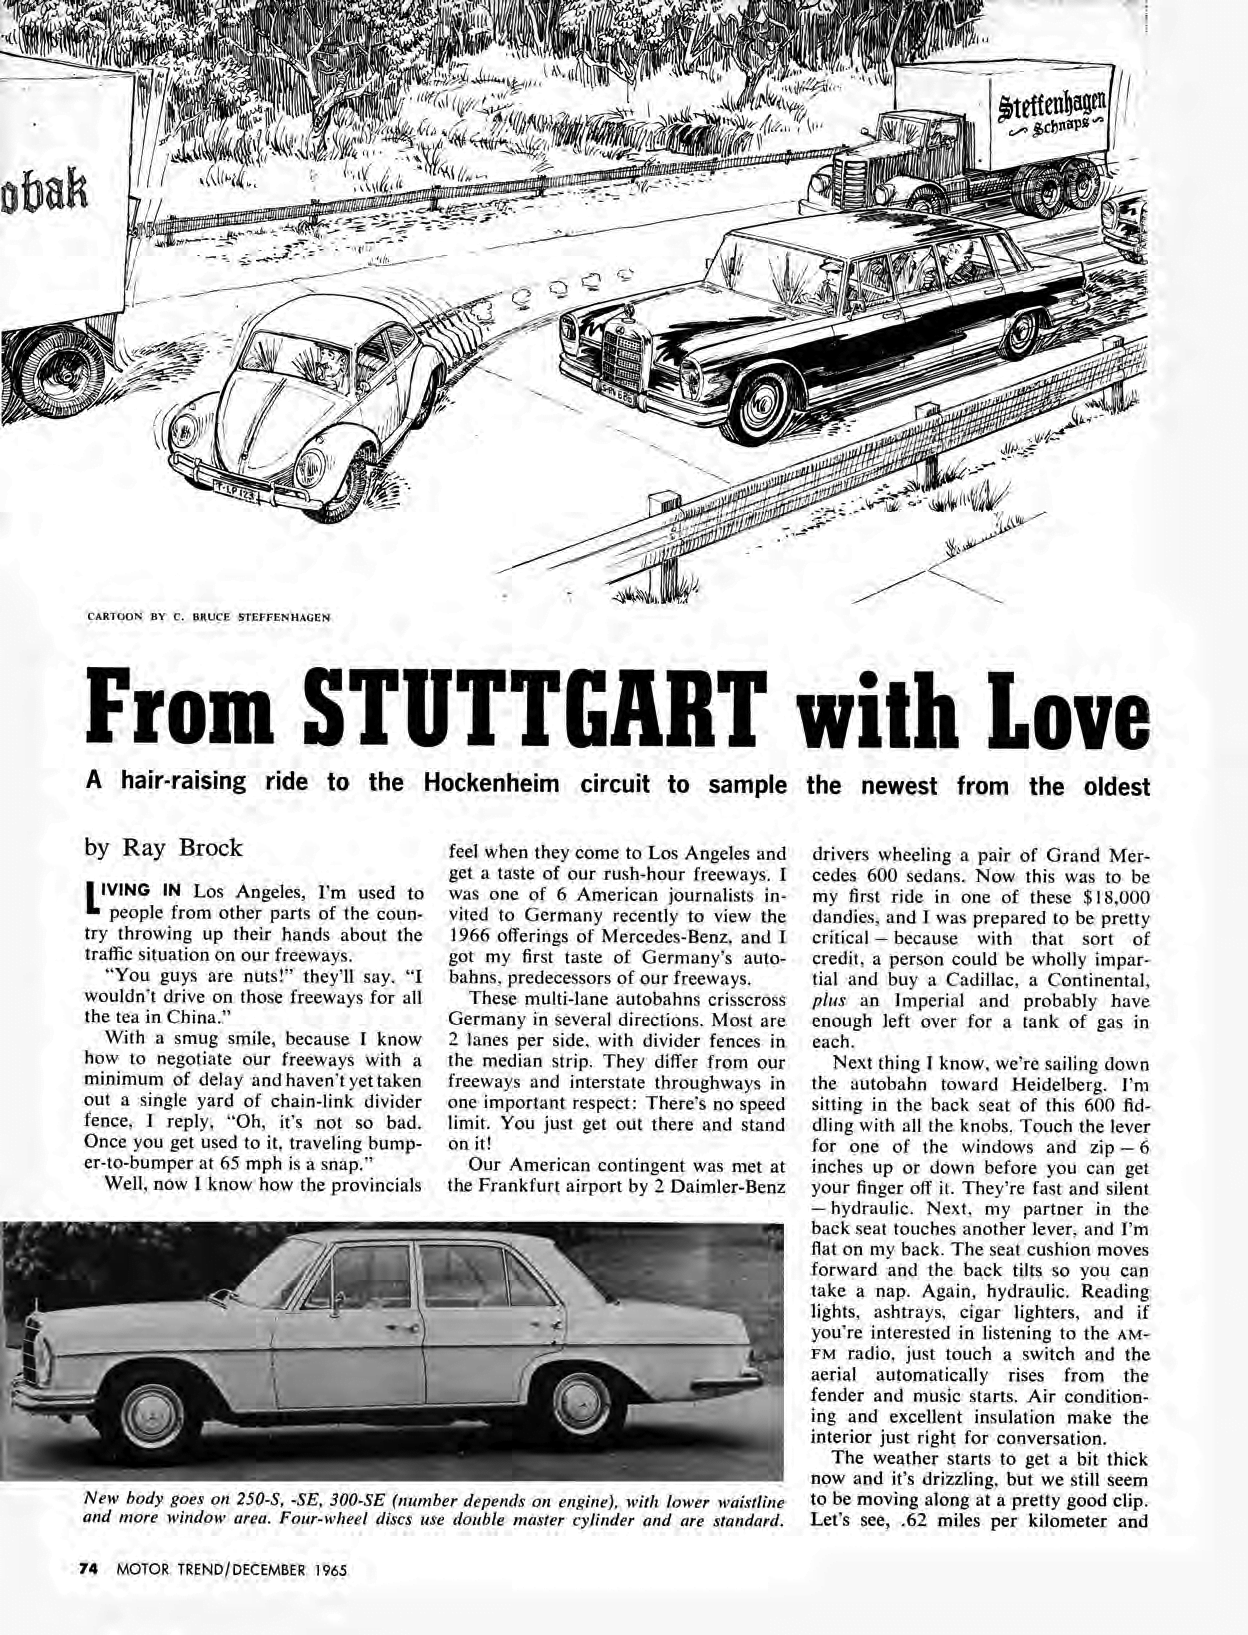 MT December 1965 - From Stuttgart with Love